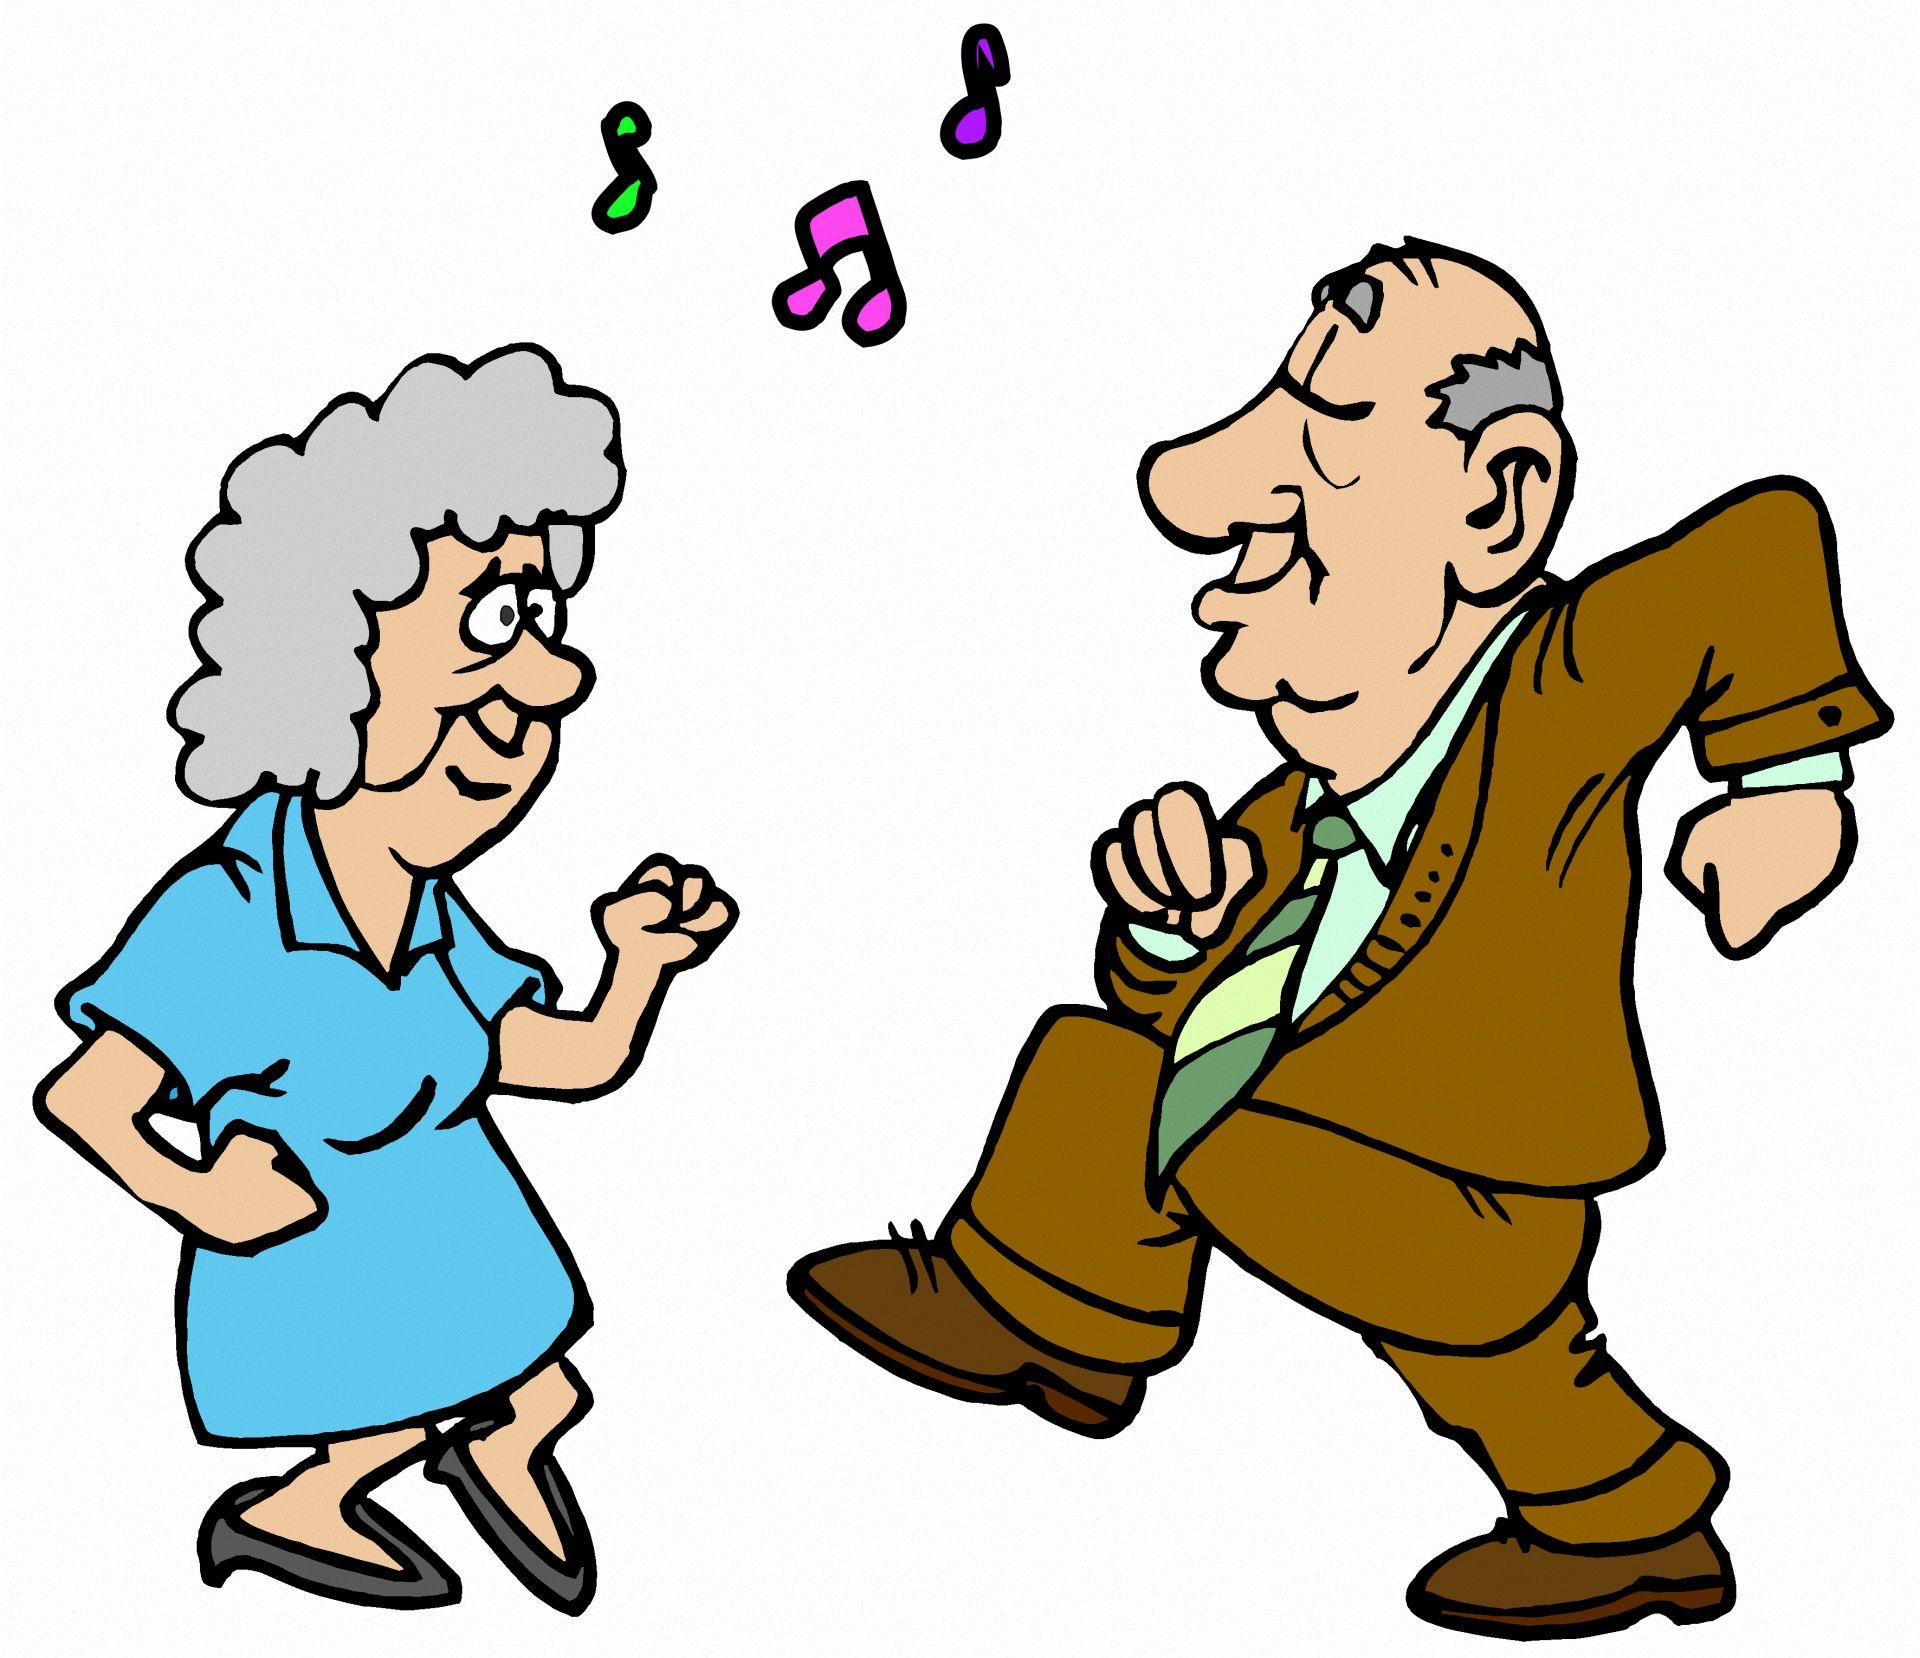 picture of senior danding Image Search Results. Cartoon people, Cartoons dancing, People dancing